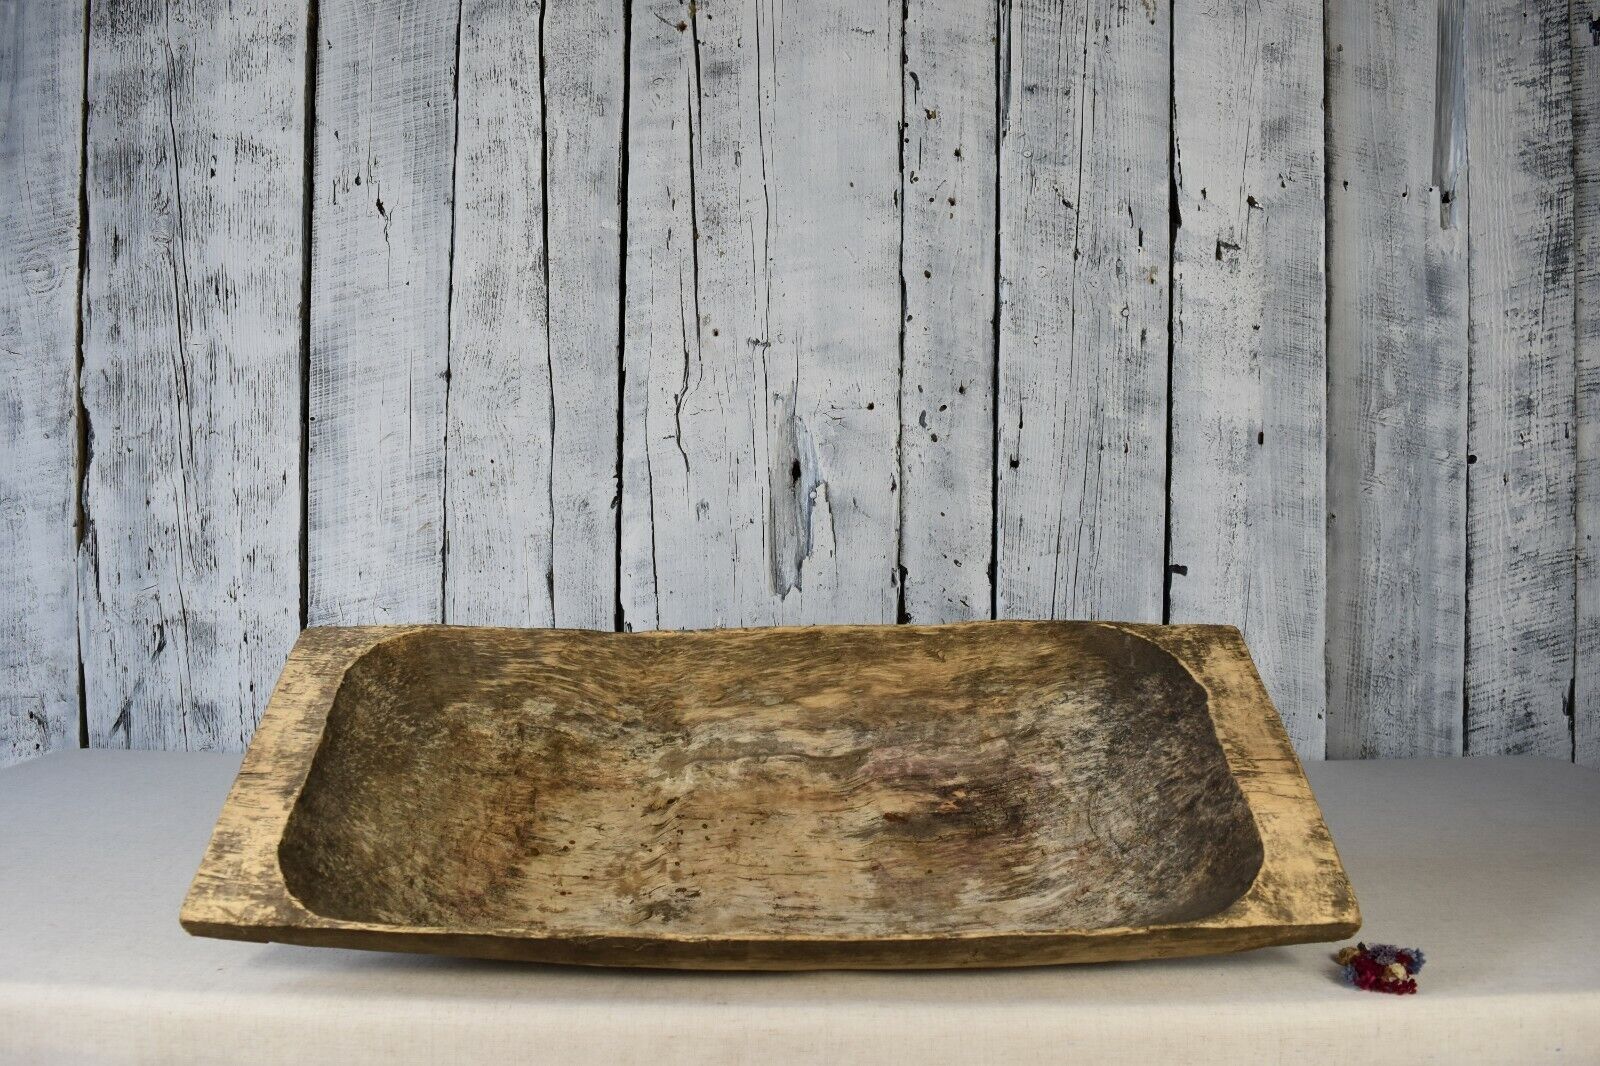 Antique Wooden Dough Bowl / Vintage Wooden Bowl / Wooden Trencher / Rustic Decor